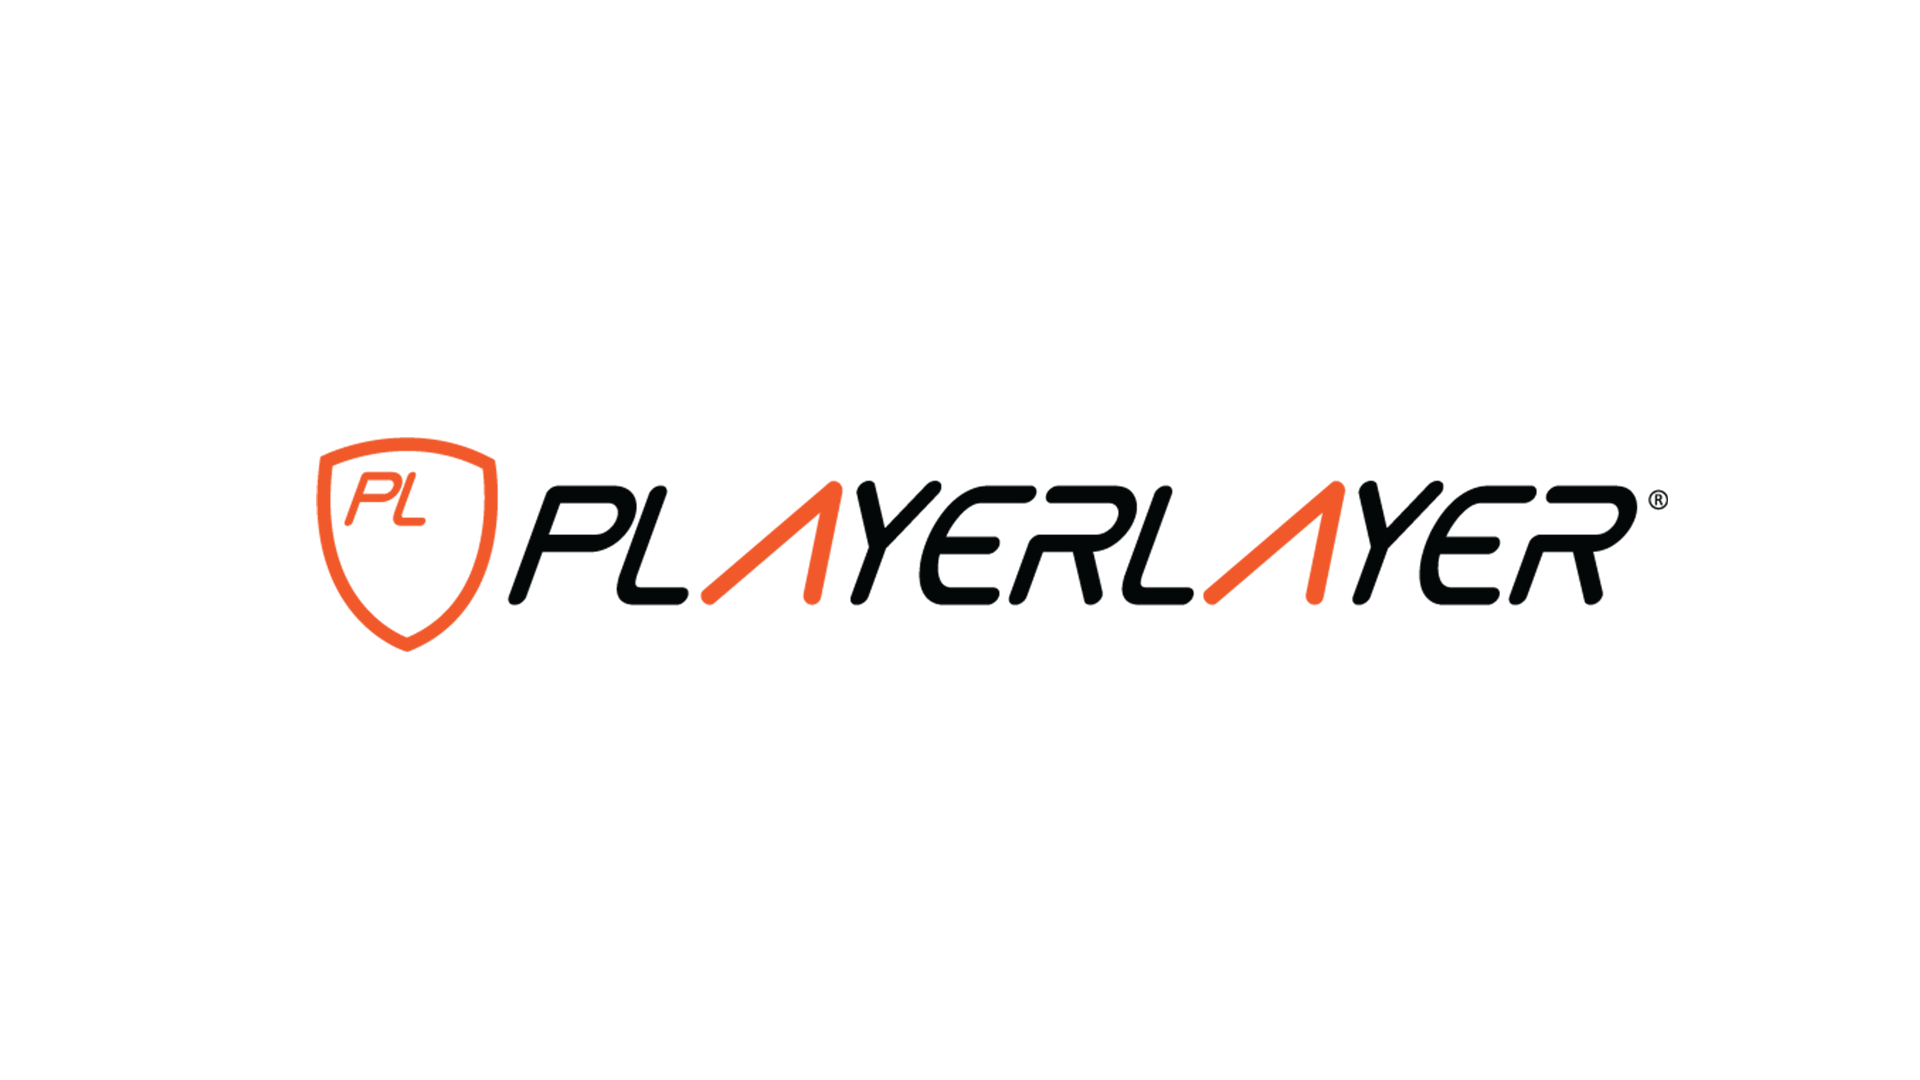 Player layer nottingham